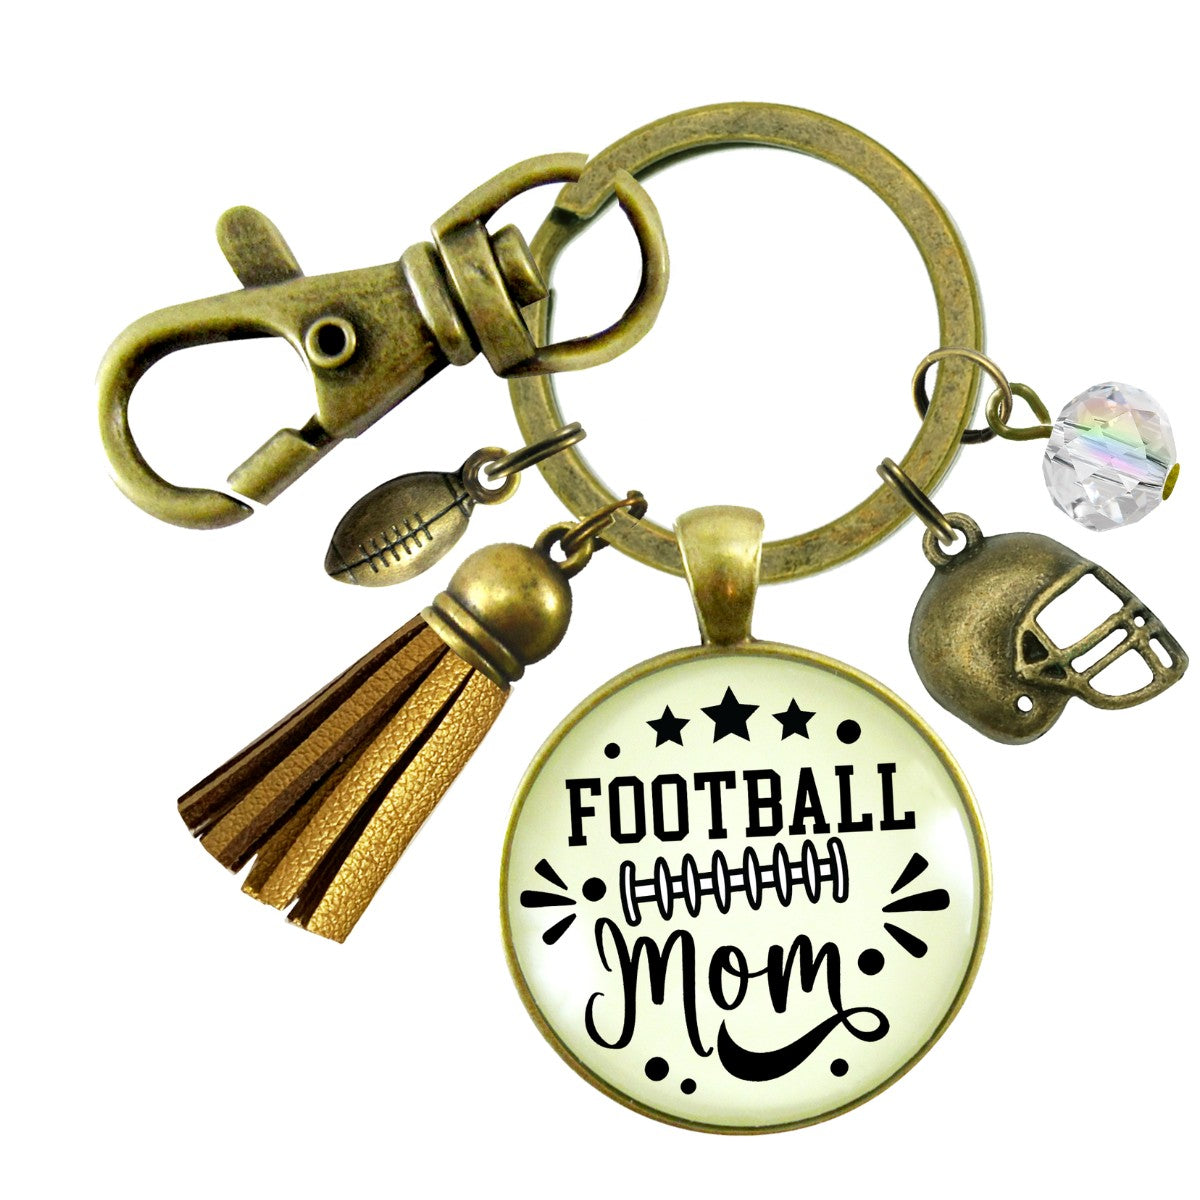 Football Mom Keychain Favorite Player Proud of Son Gift Jewelry Sports Team Handmade Autumn Season Pendant Quote  Keychain - Women - Gutsy Goodness Handmade Jewelry